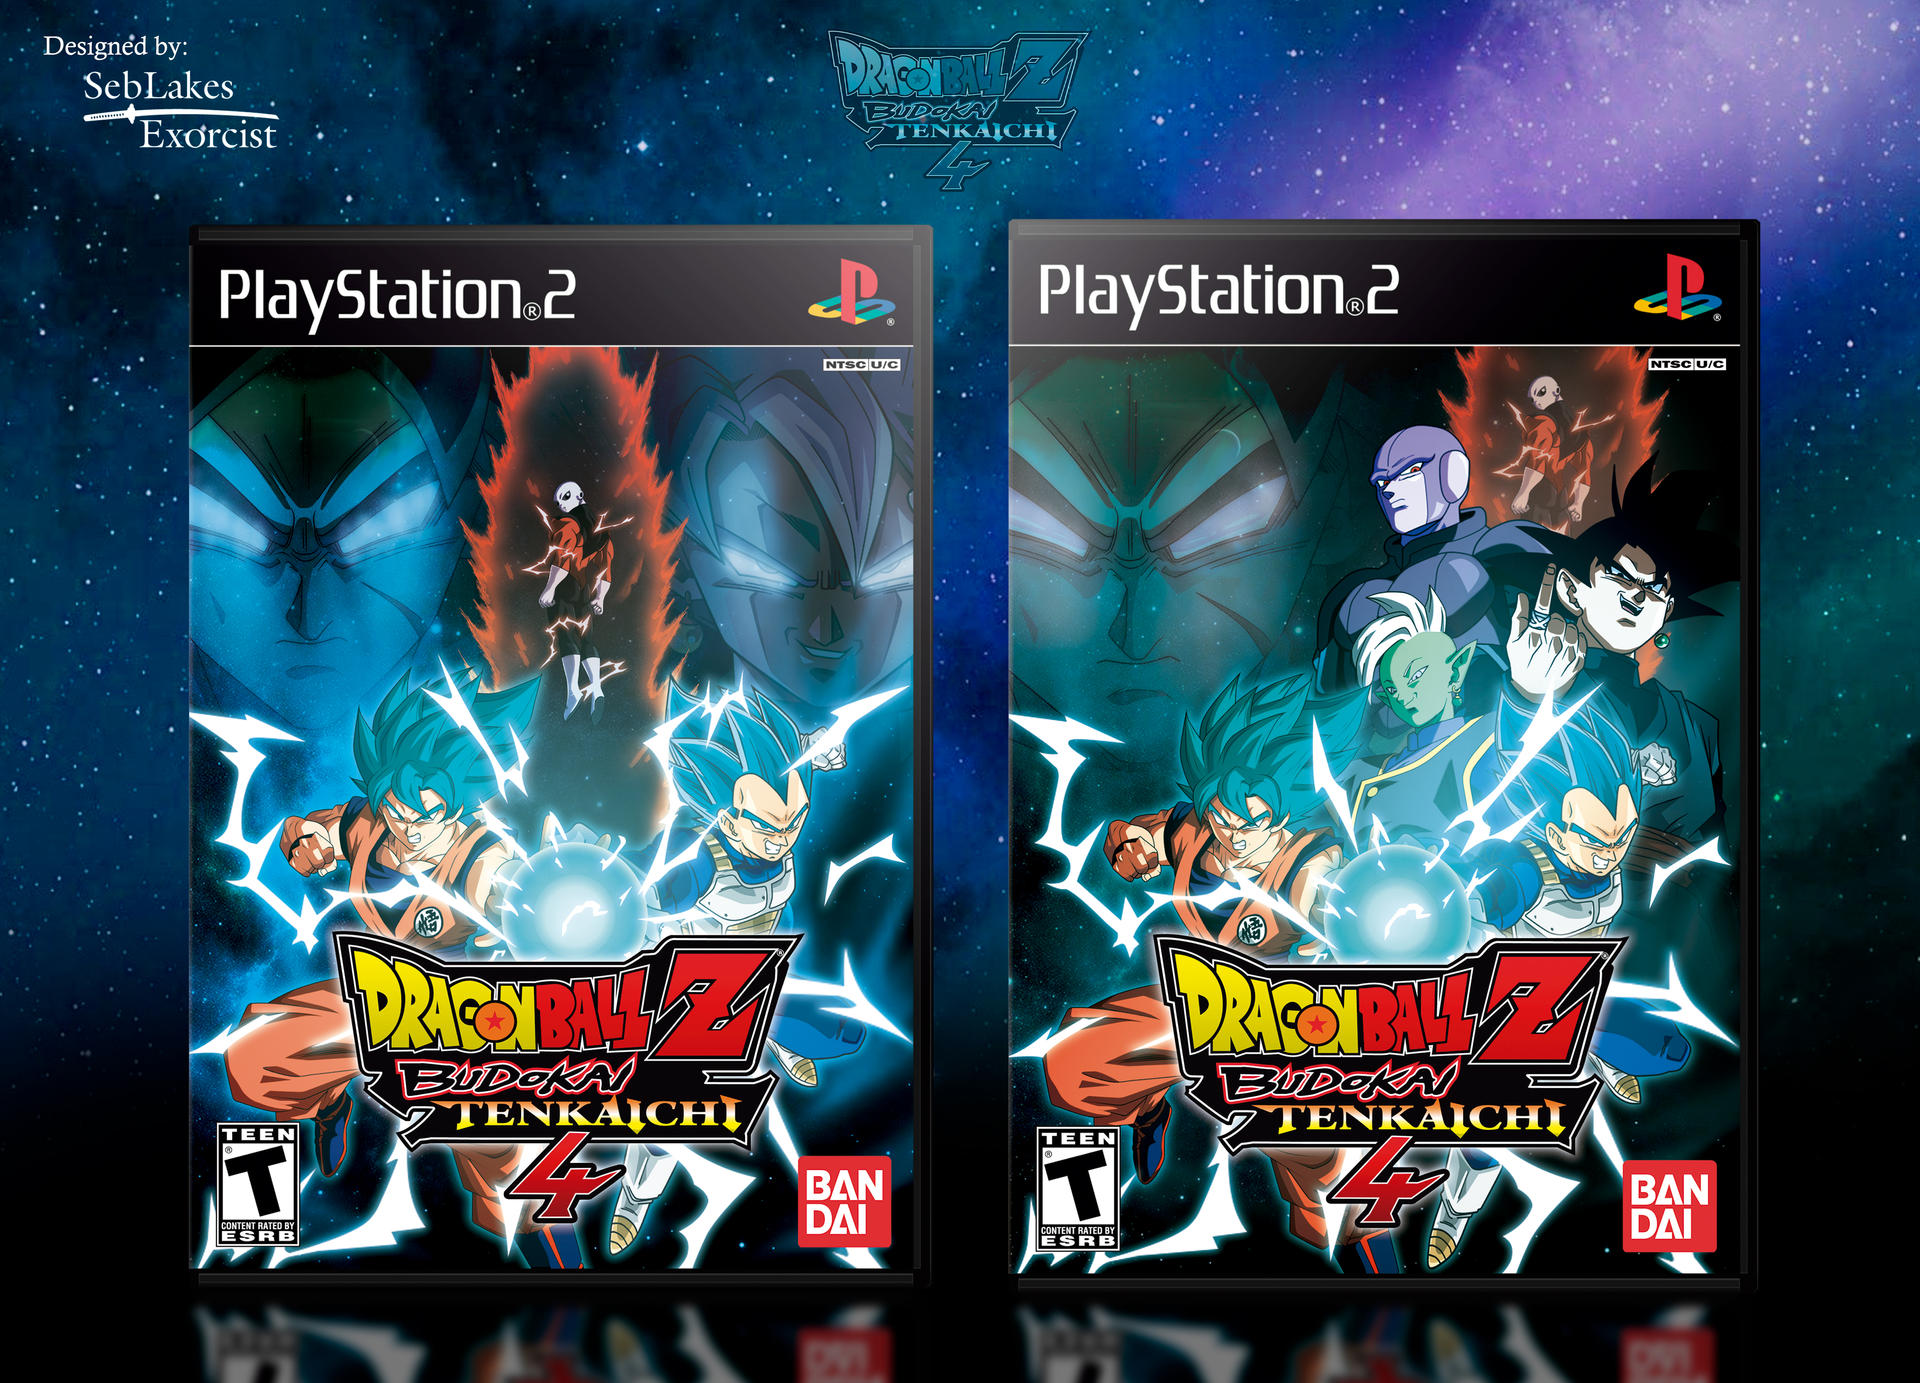 Dragon Ball Z Budokai Tenkaichi 4 - Steam Cover by EvilZGaruda on DeviantArt